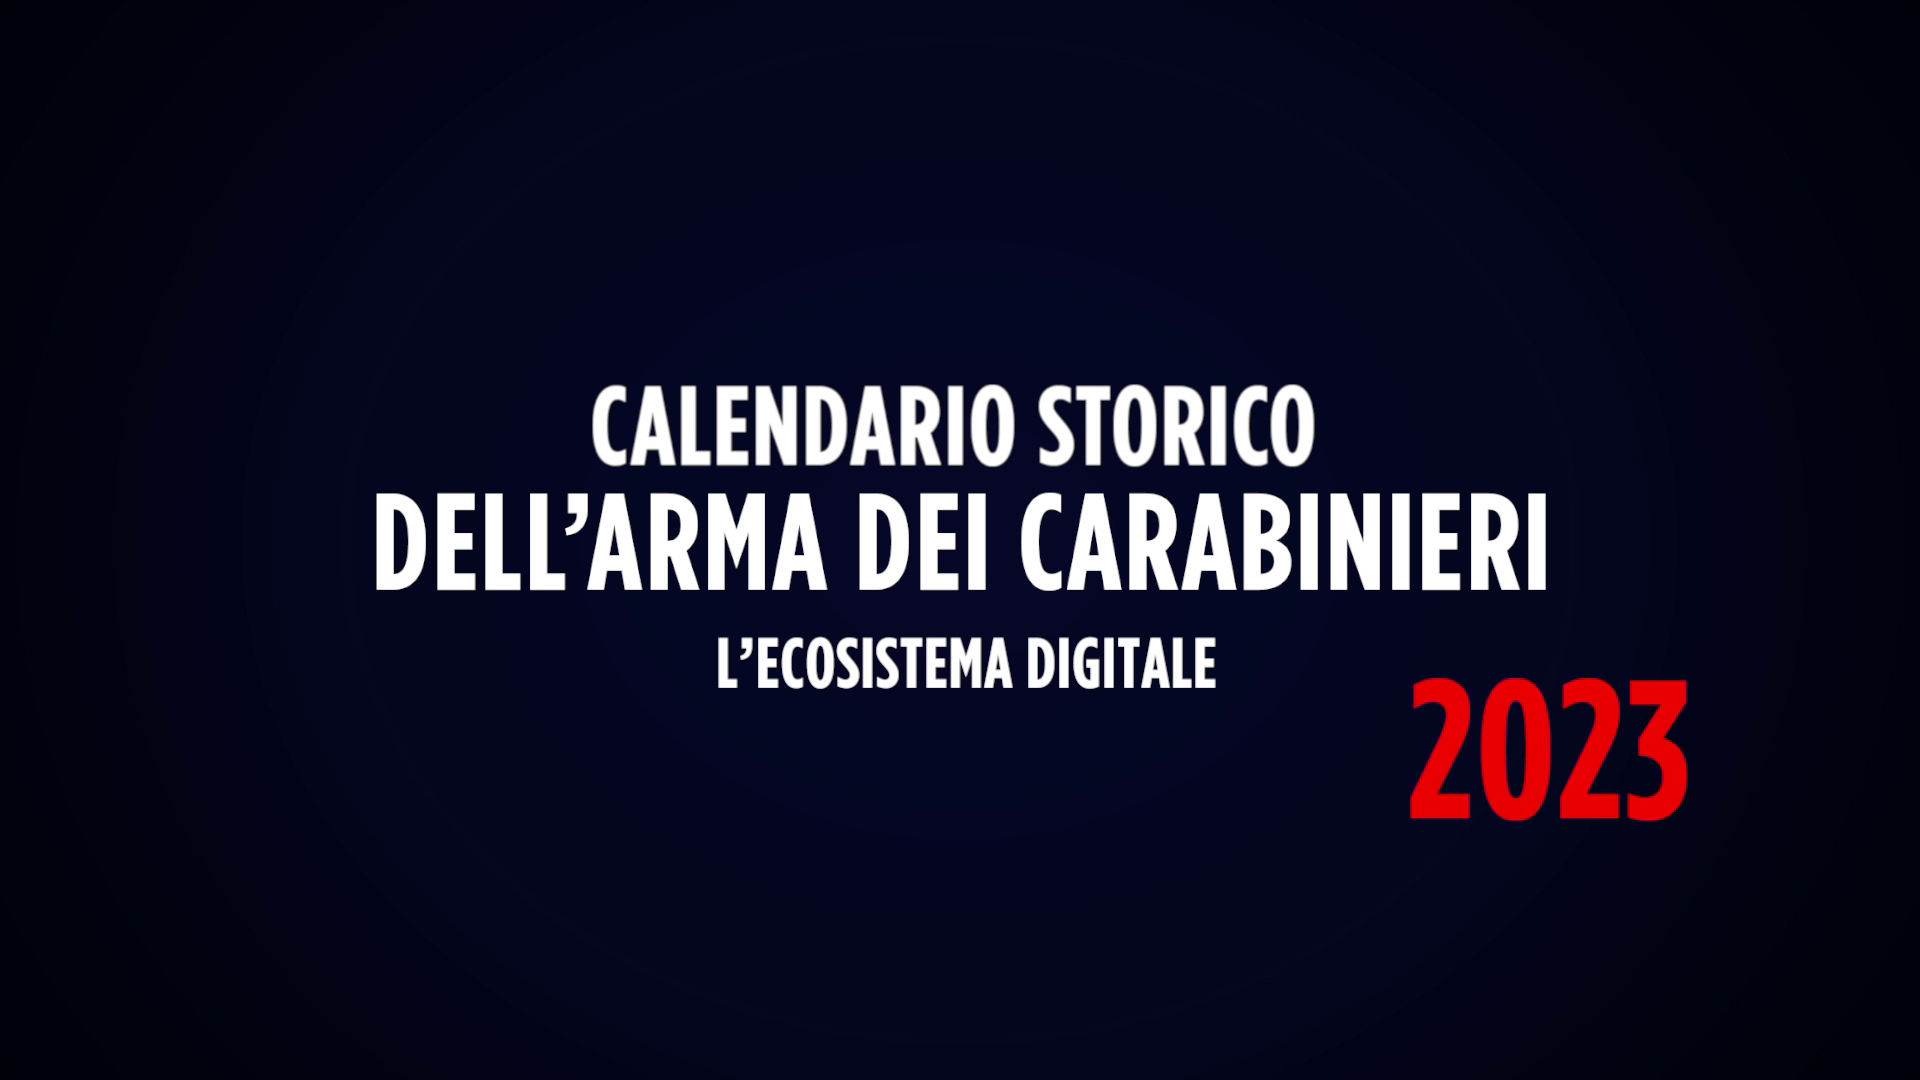 Calendario_carabinieri_digital_nft_v2-261022_hq-18